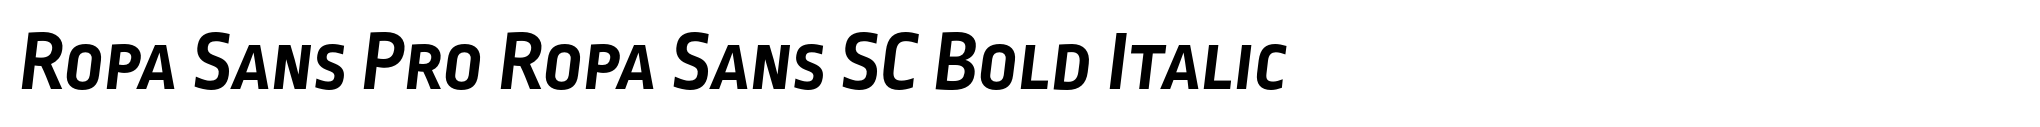 Ropa Sans Pro Ropa Sans SC Bold Italic image